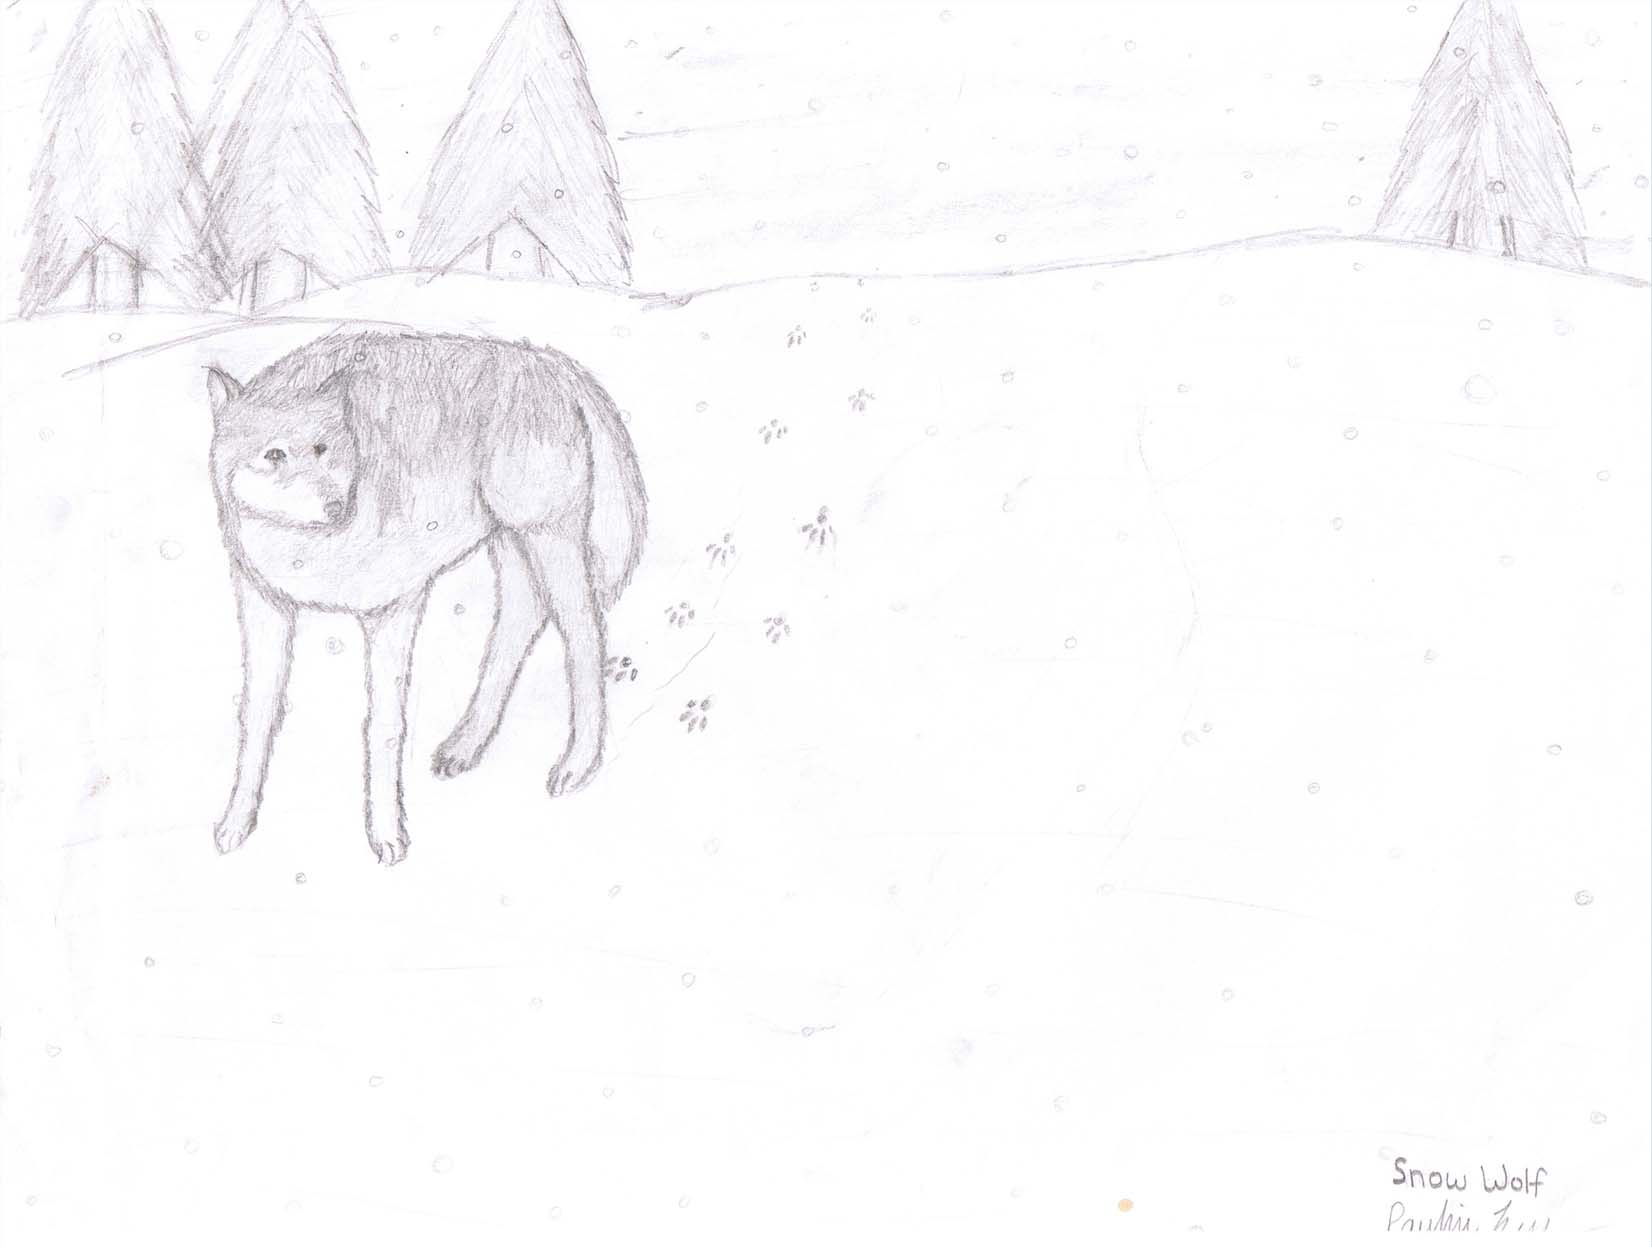 Snow Wolf by Pabbit_da_Rabbit